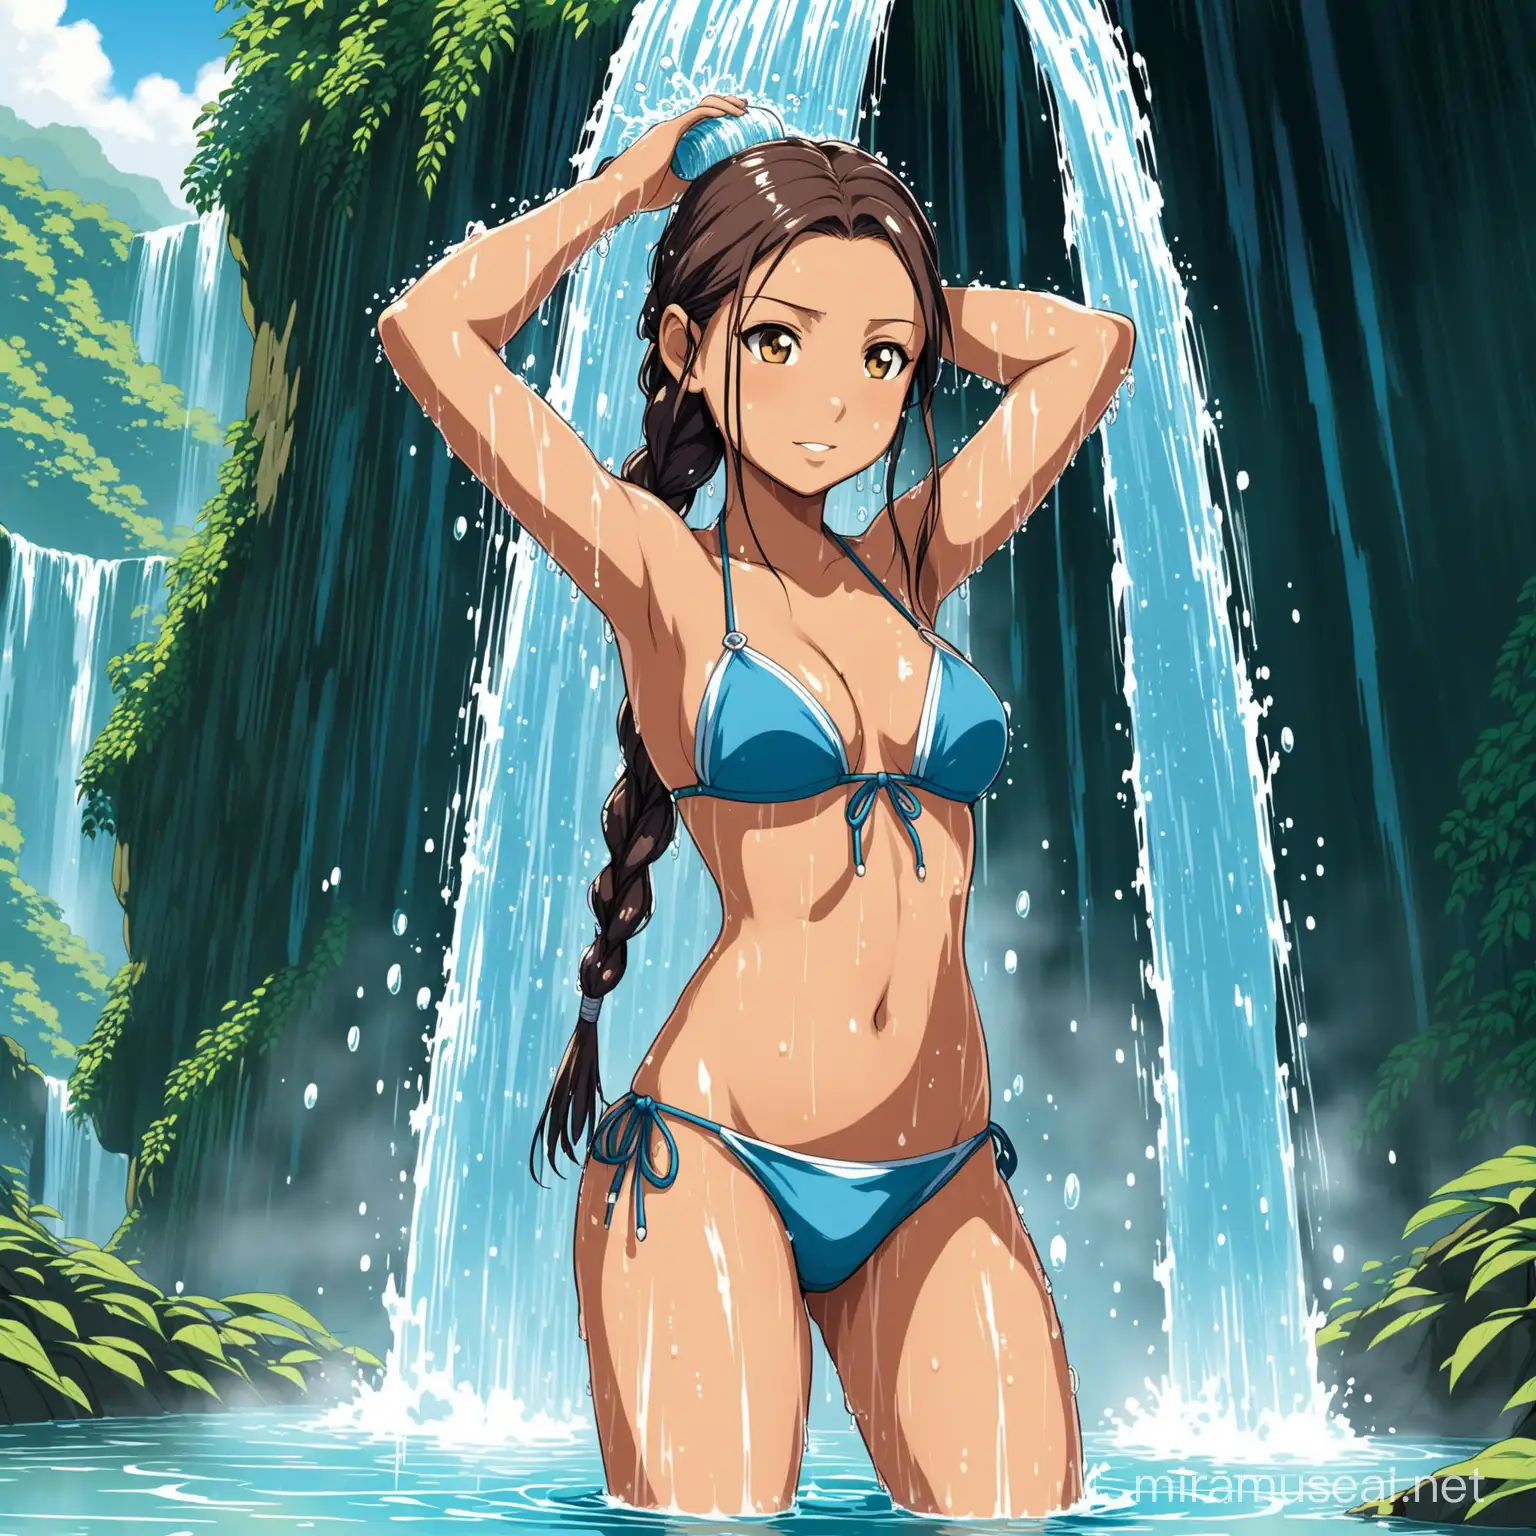 Katara from avatar, taking a shower in a waterfall, sexy, braided hair, bikini